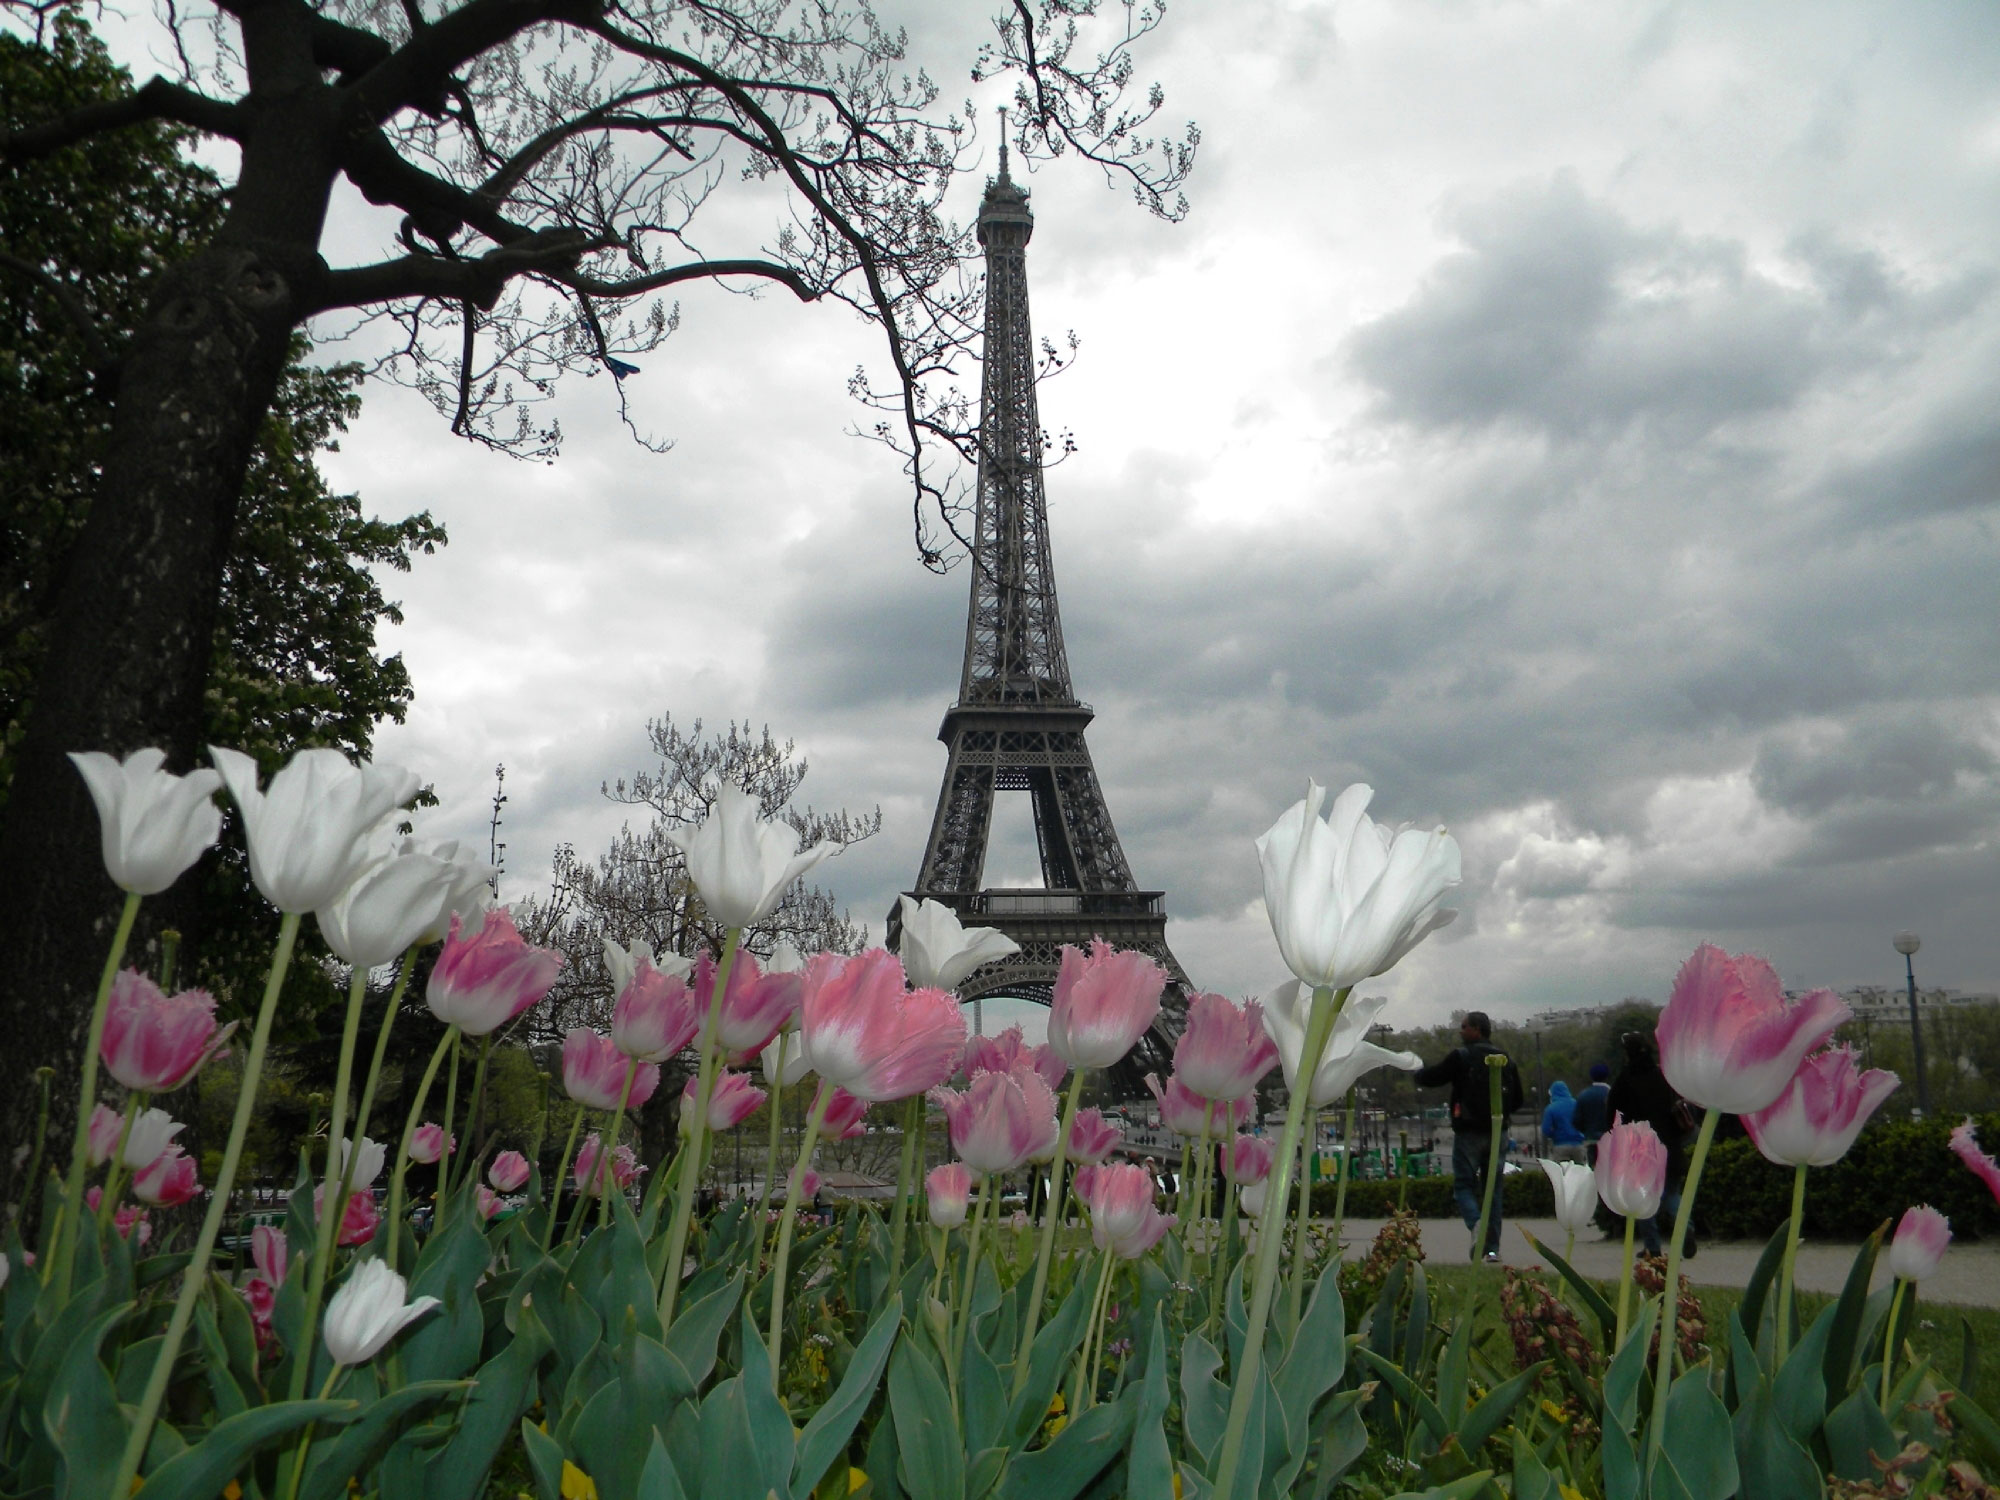 TripAdvisor reveals Paris, France as the second priciest city for an international trip during summer 2014. (A TripAdvisor traveler photo)